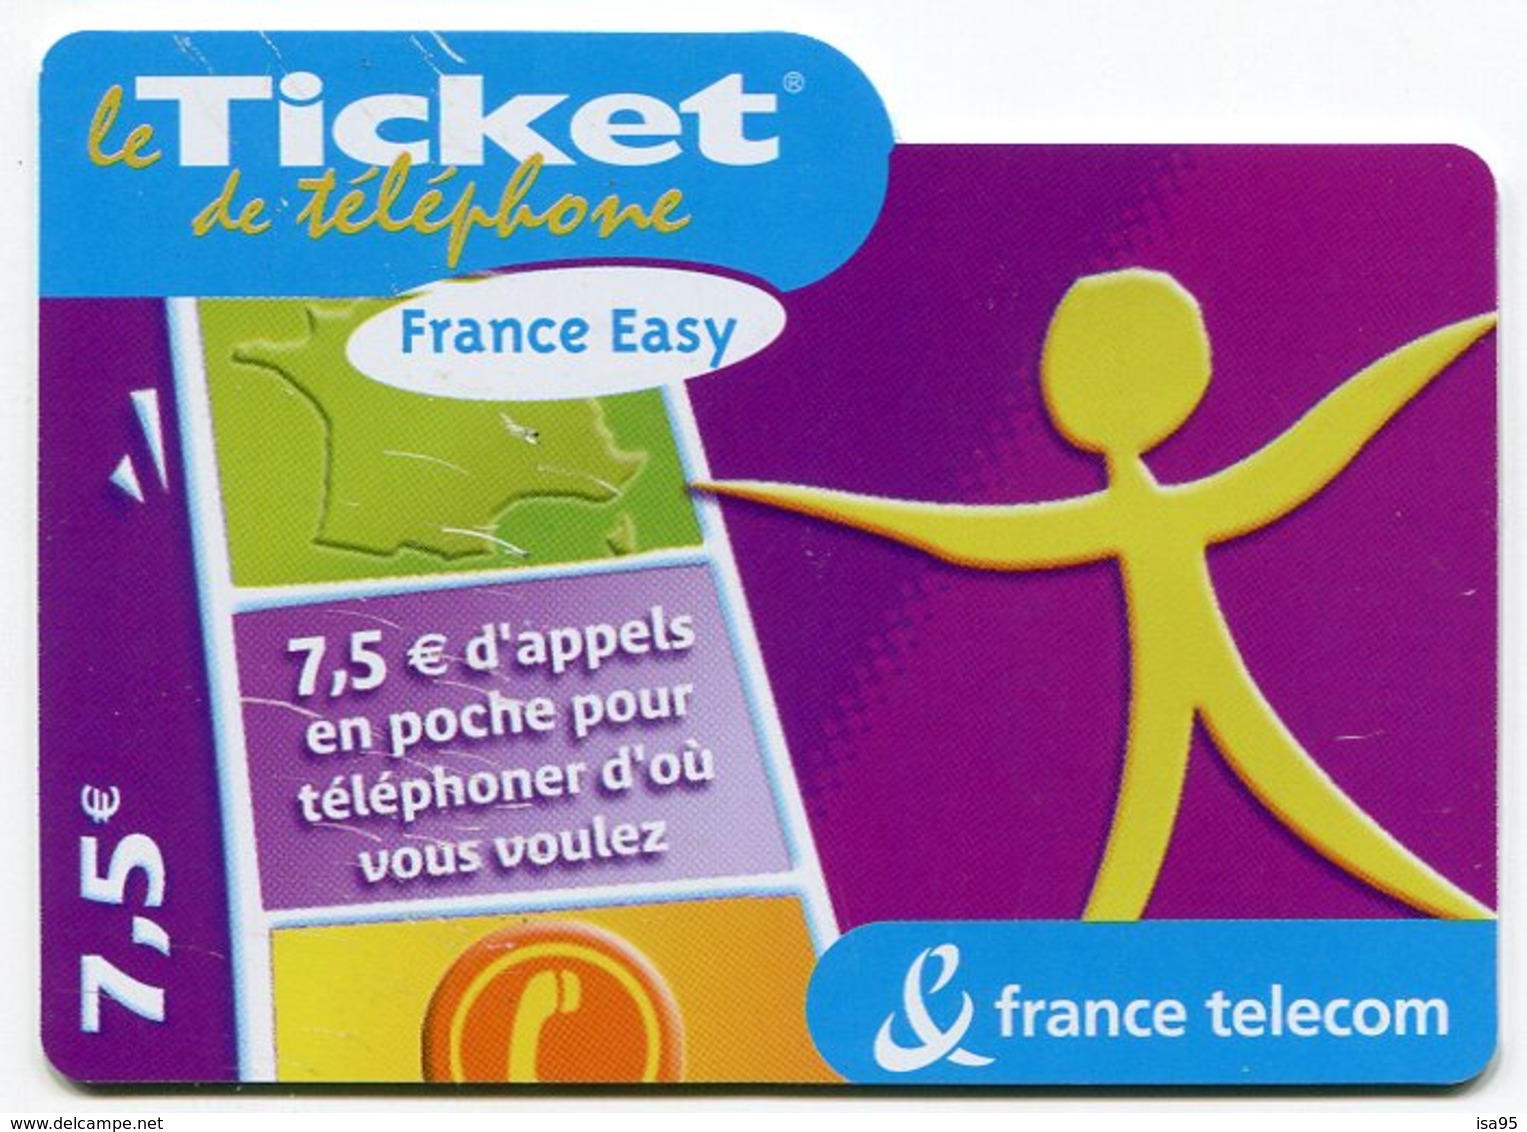 TELECARTE-LE TICKET DE TELEPHONE FRANCE EASY-2005-7.5€ - Tickets FT